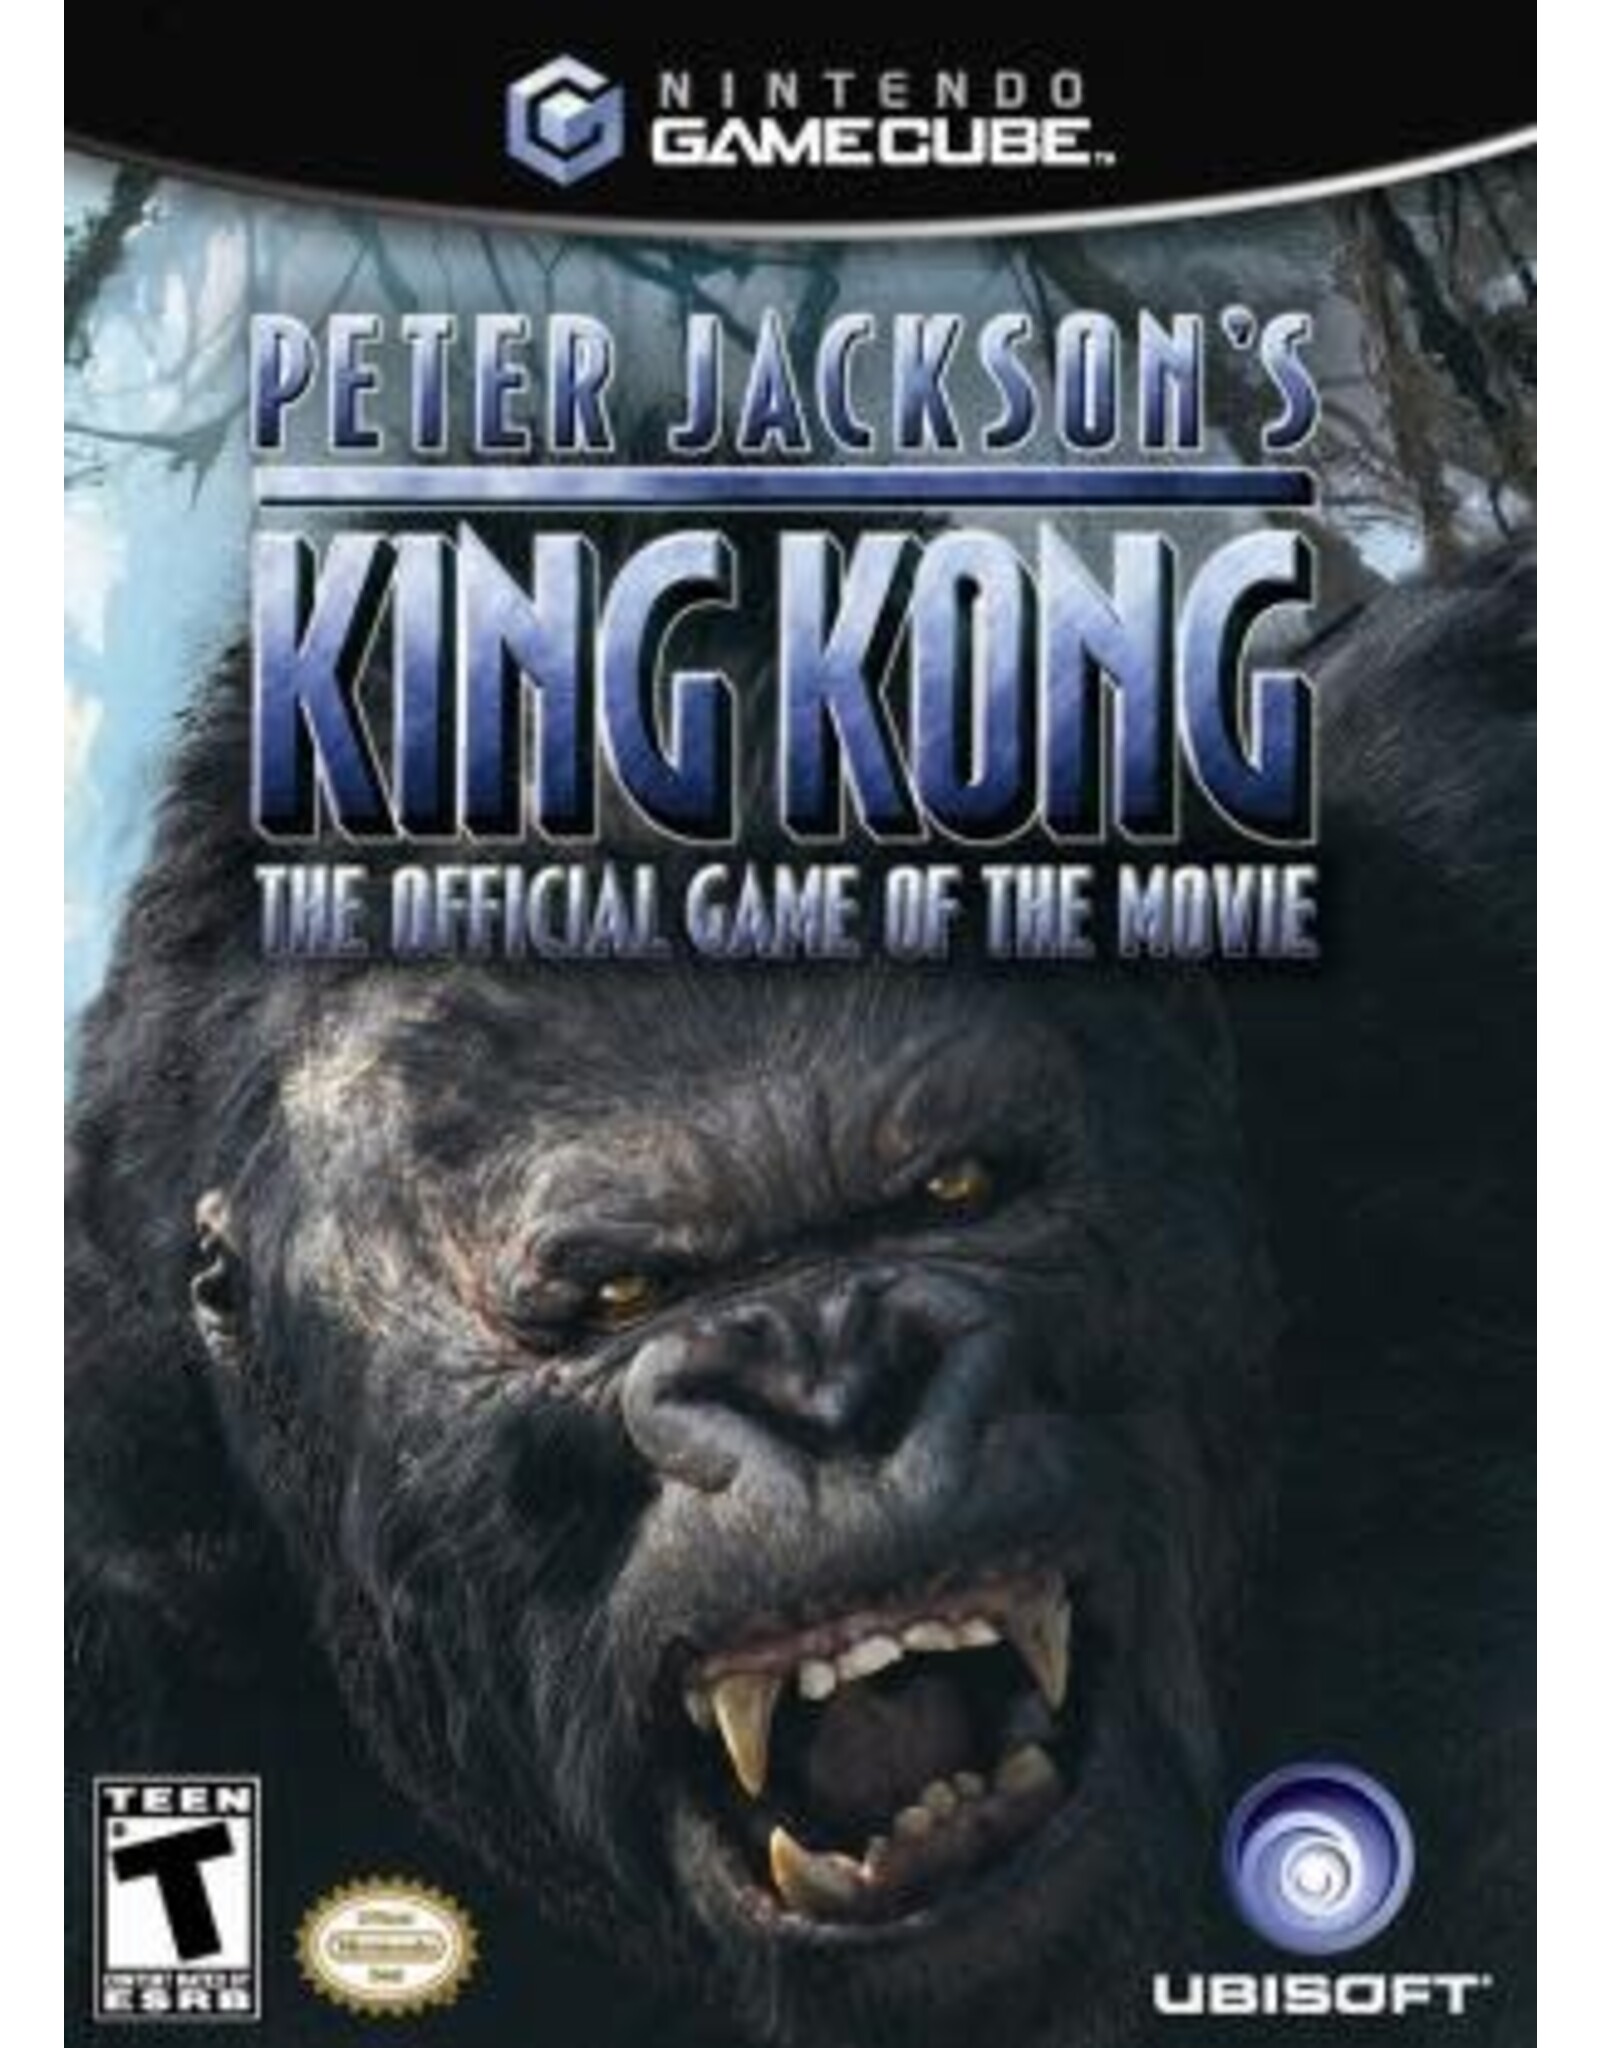 Gamecube King Kong (No Manual)